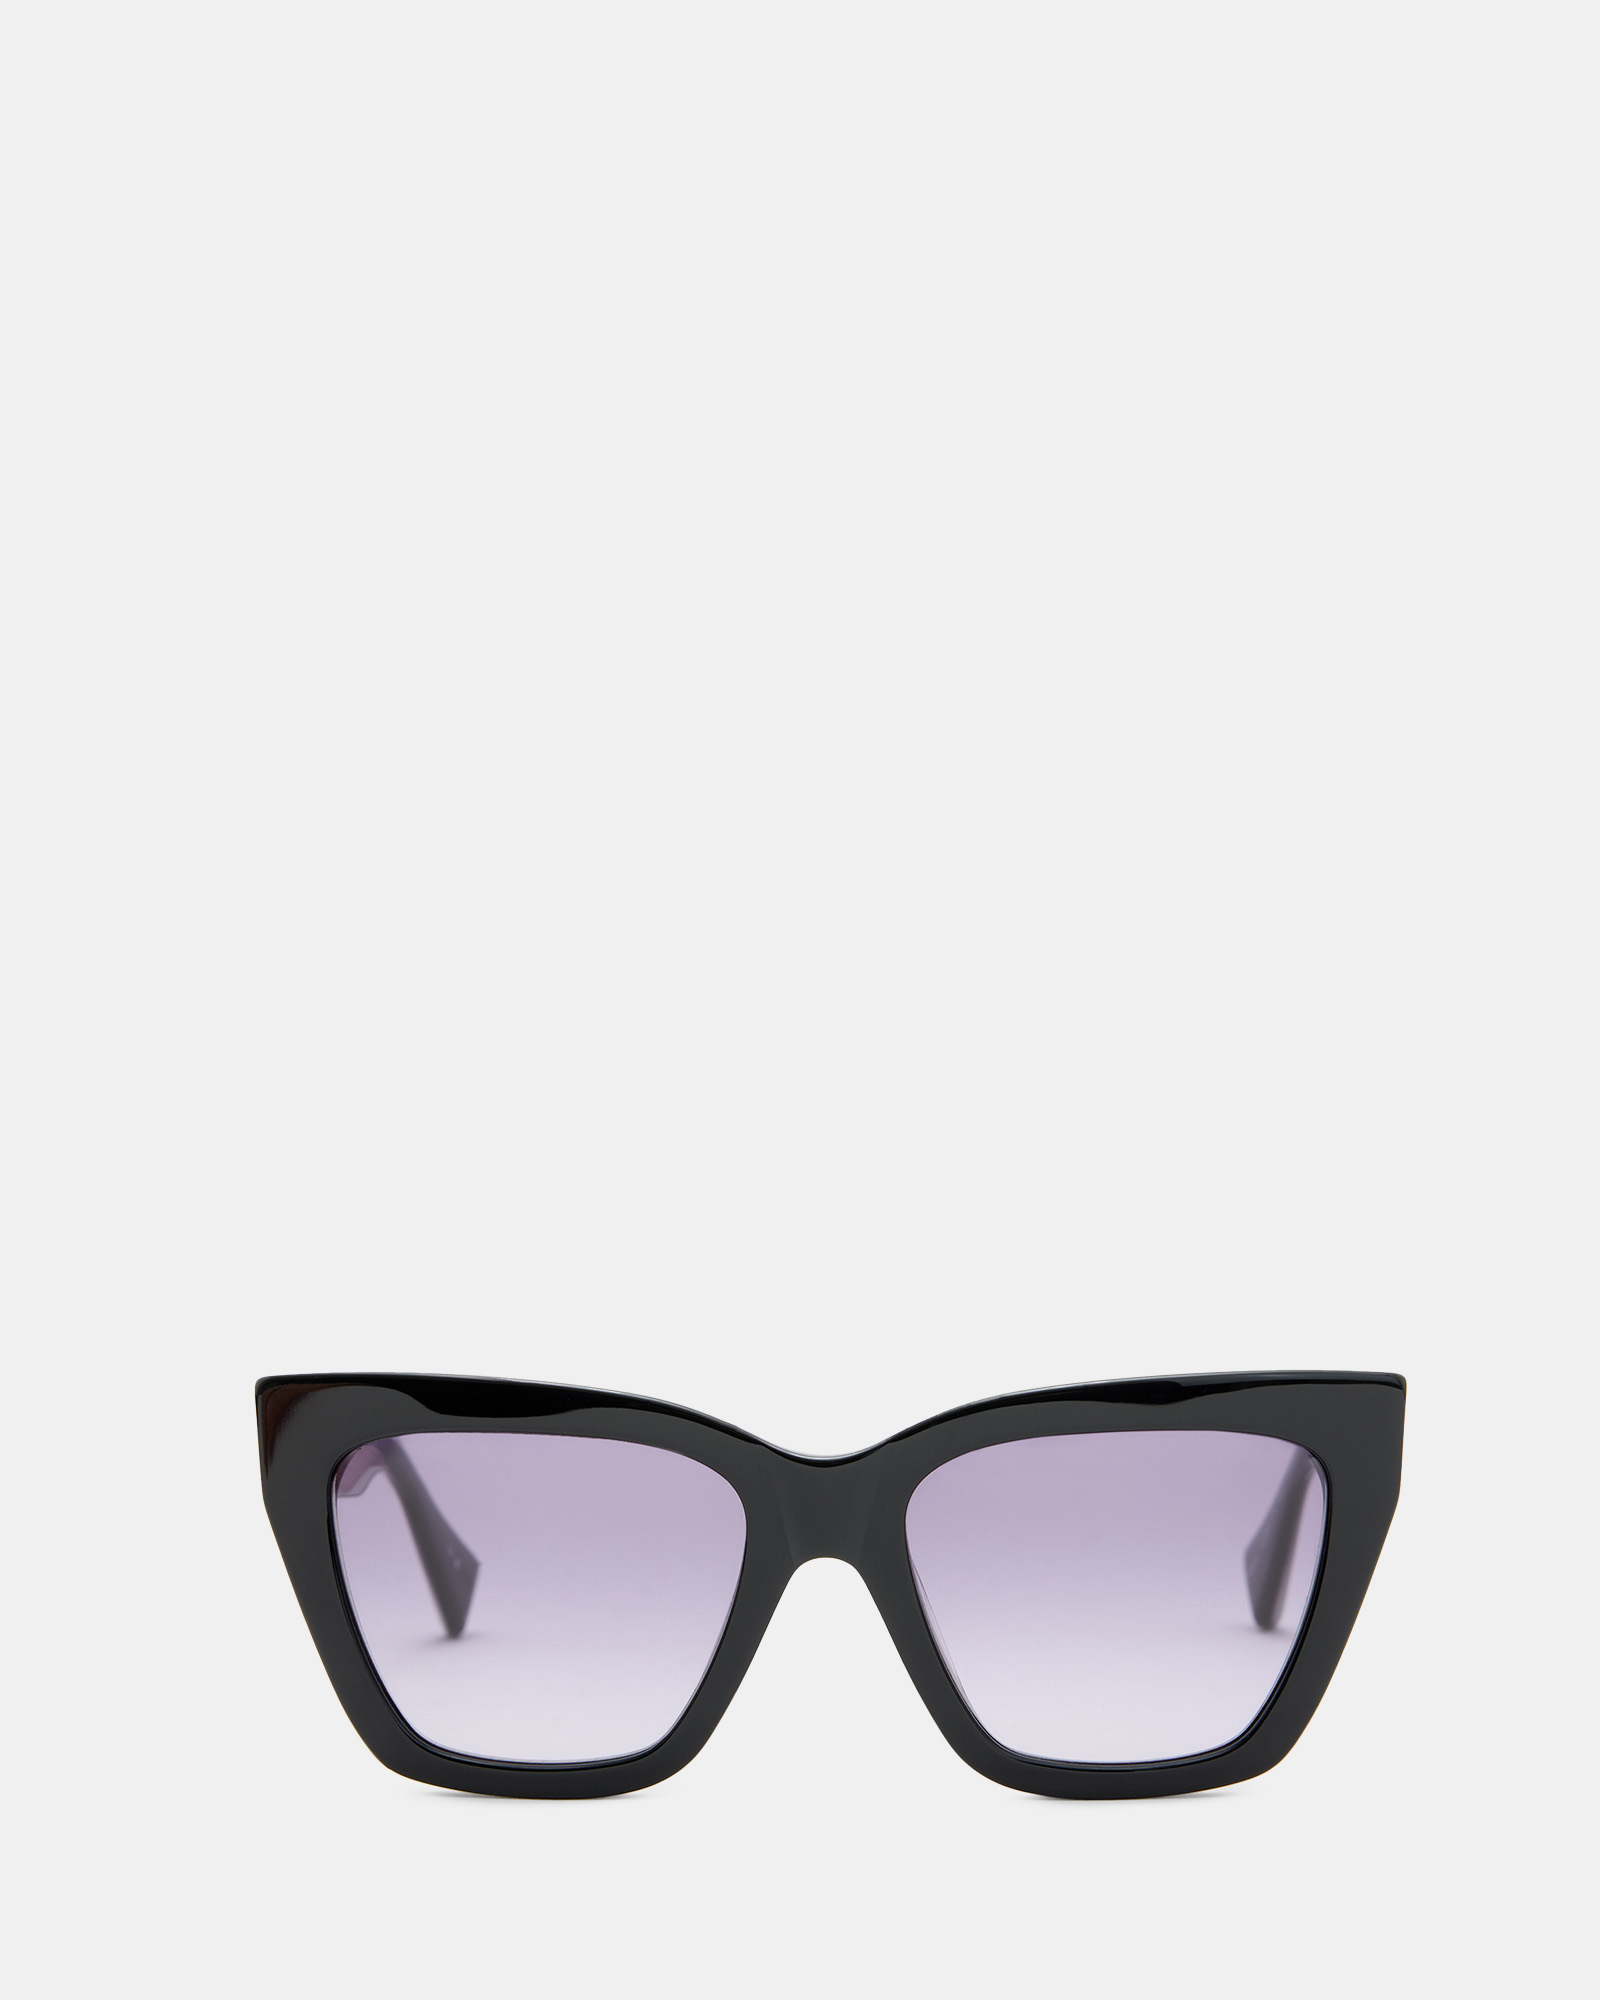 AllSaints Minerva Cat Eye Sunglasses,, GLOSS BLACK